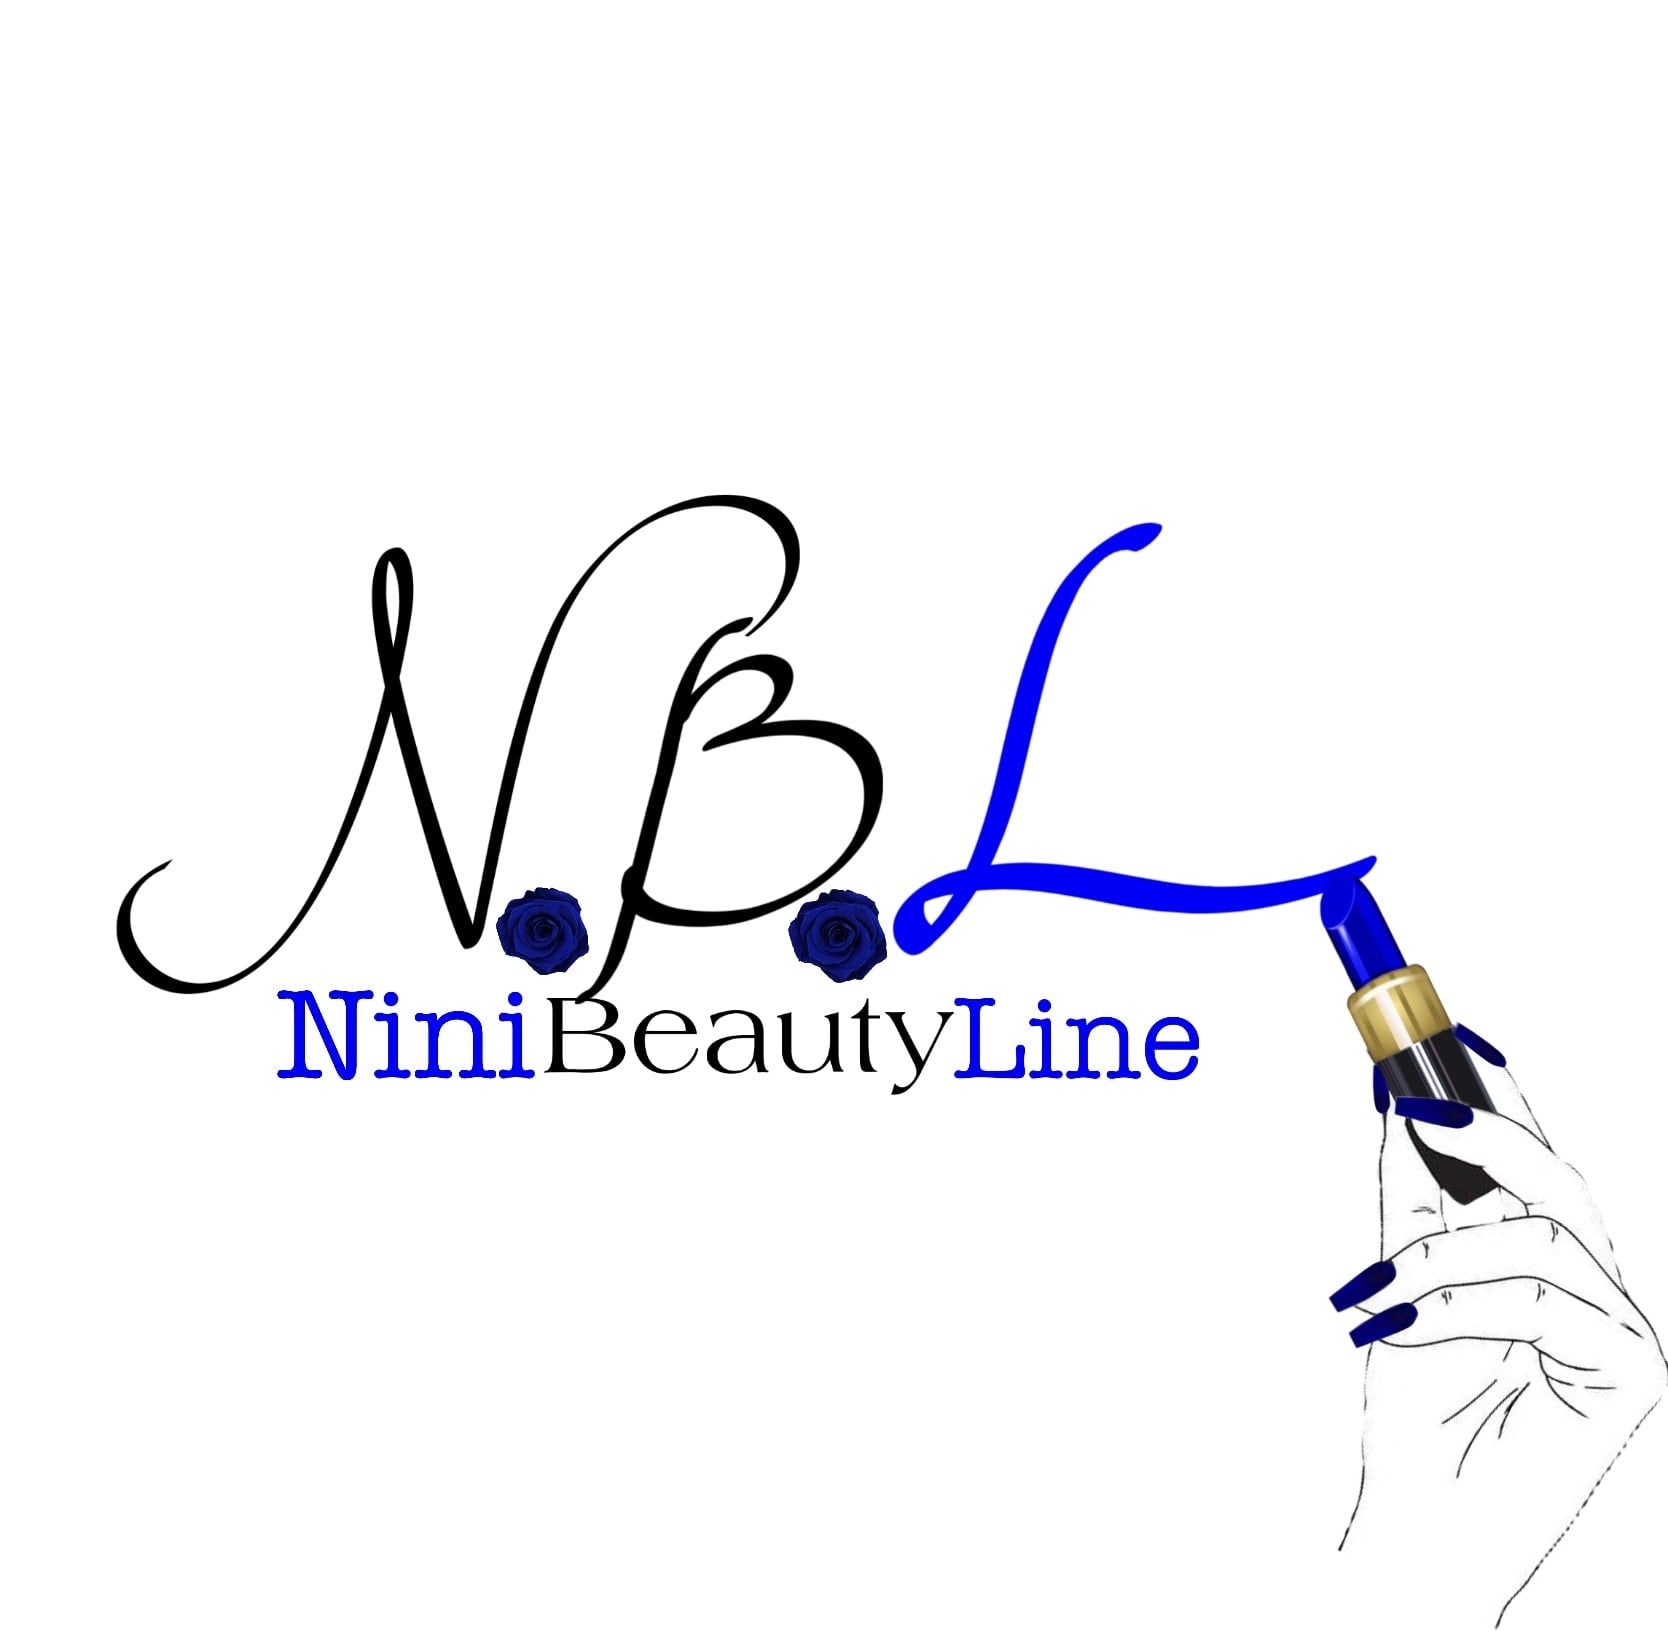 Nini Beauty Line